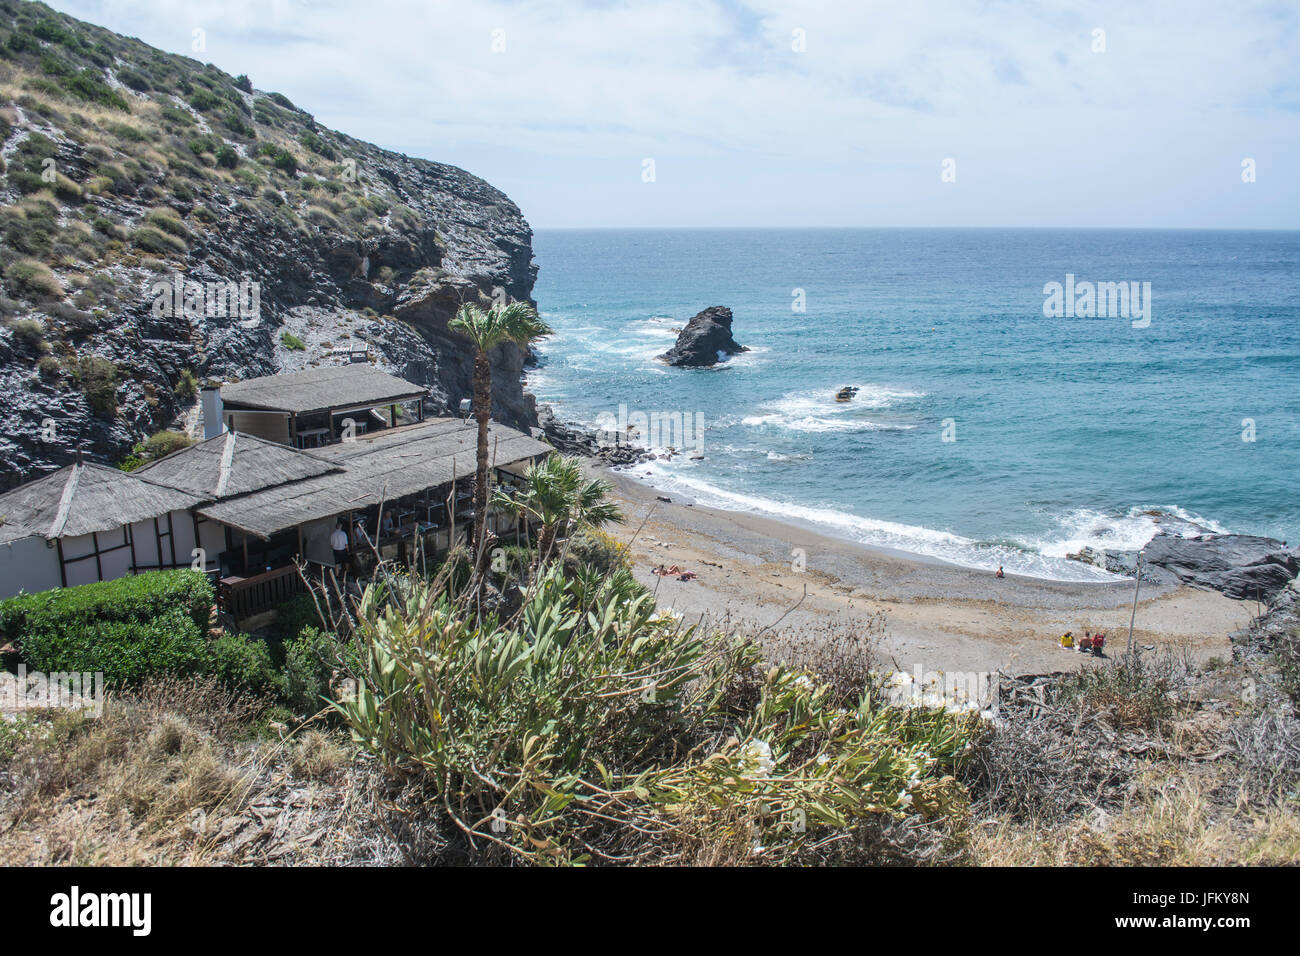 La Cala Restaurant overlooking the bay and the mediterranian sea Stock Photo